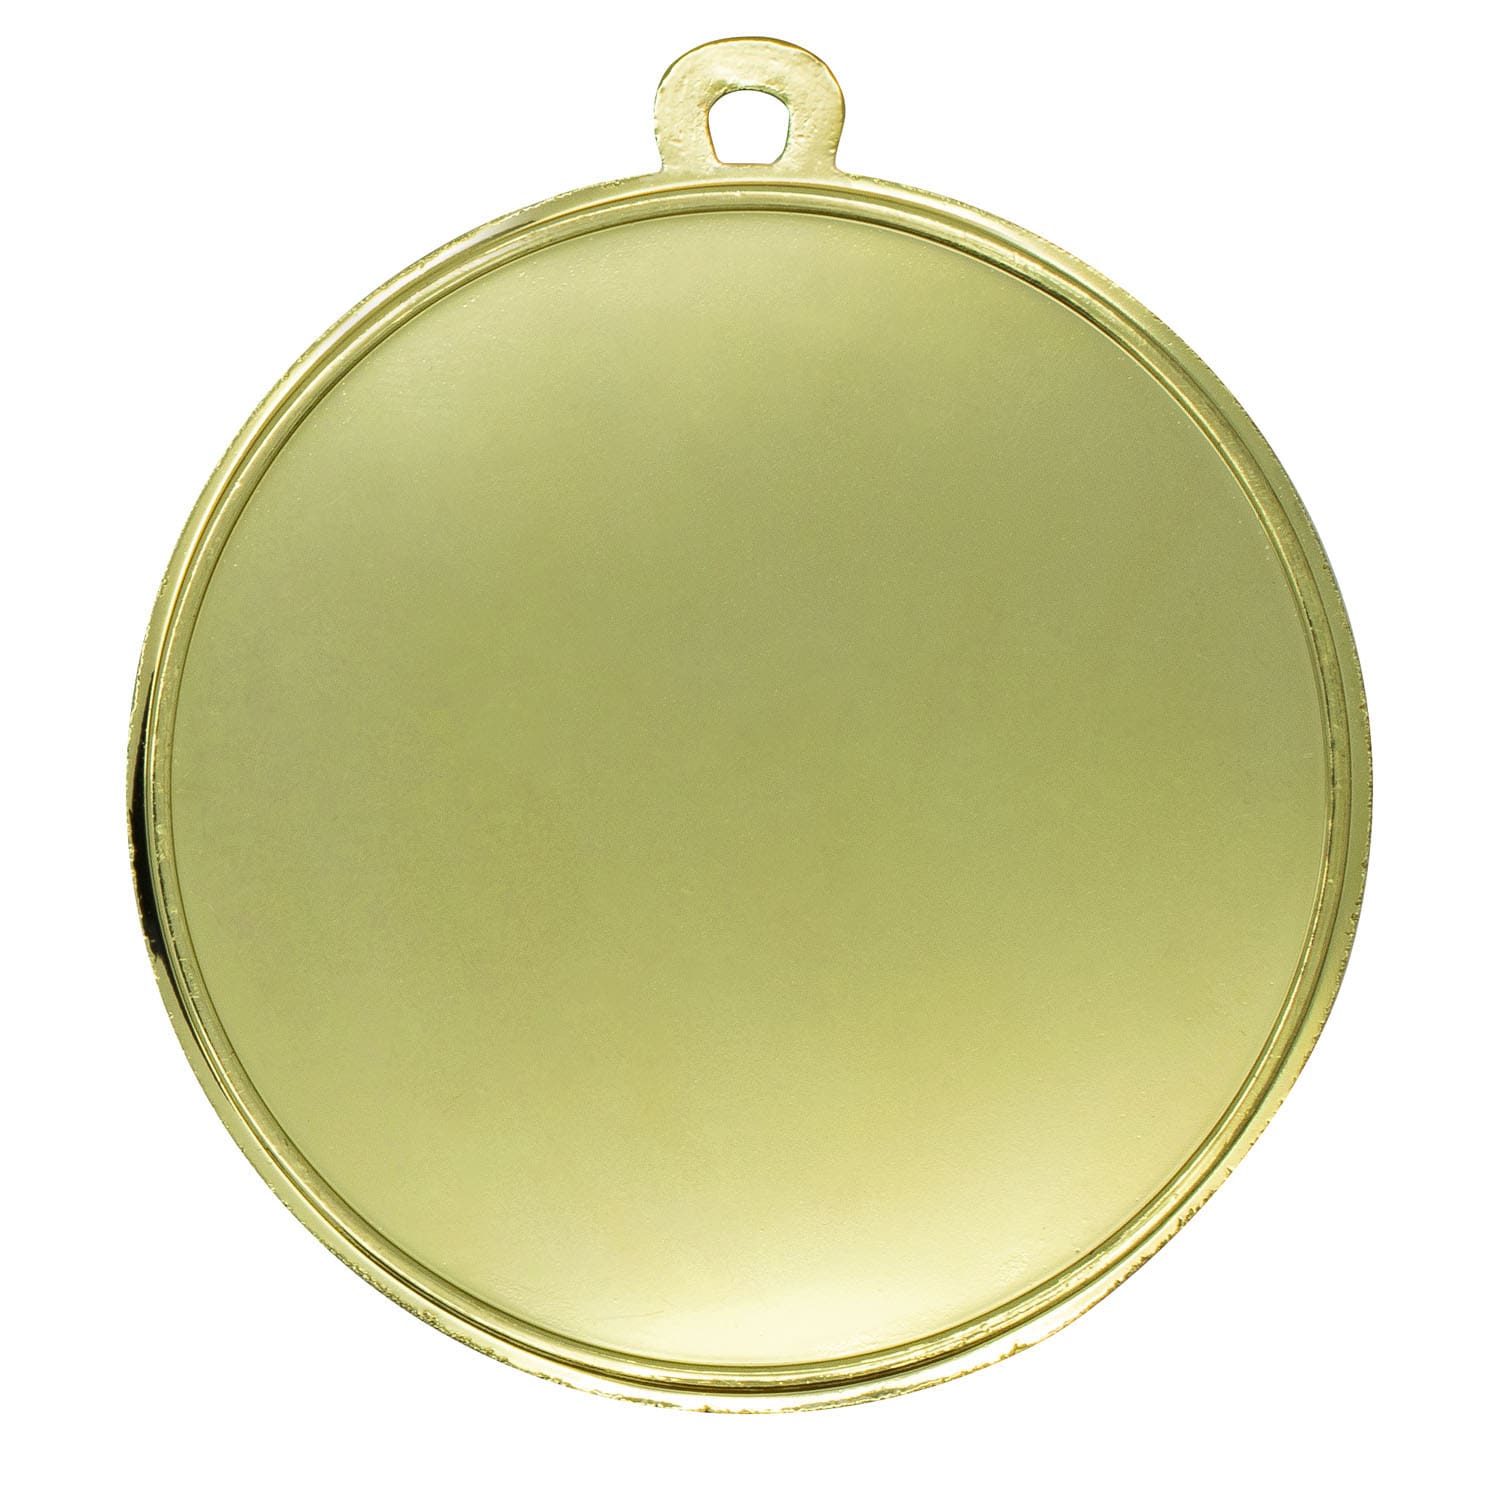 Medaille "Tennis" Ø 65mm gold mit Band